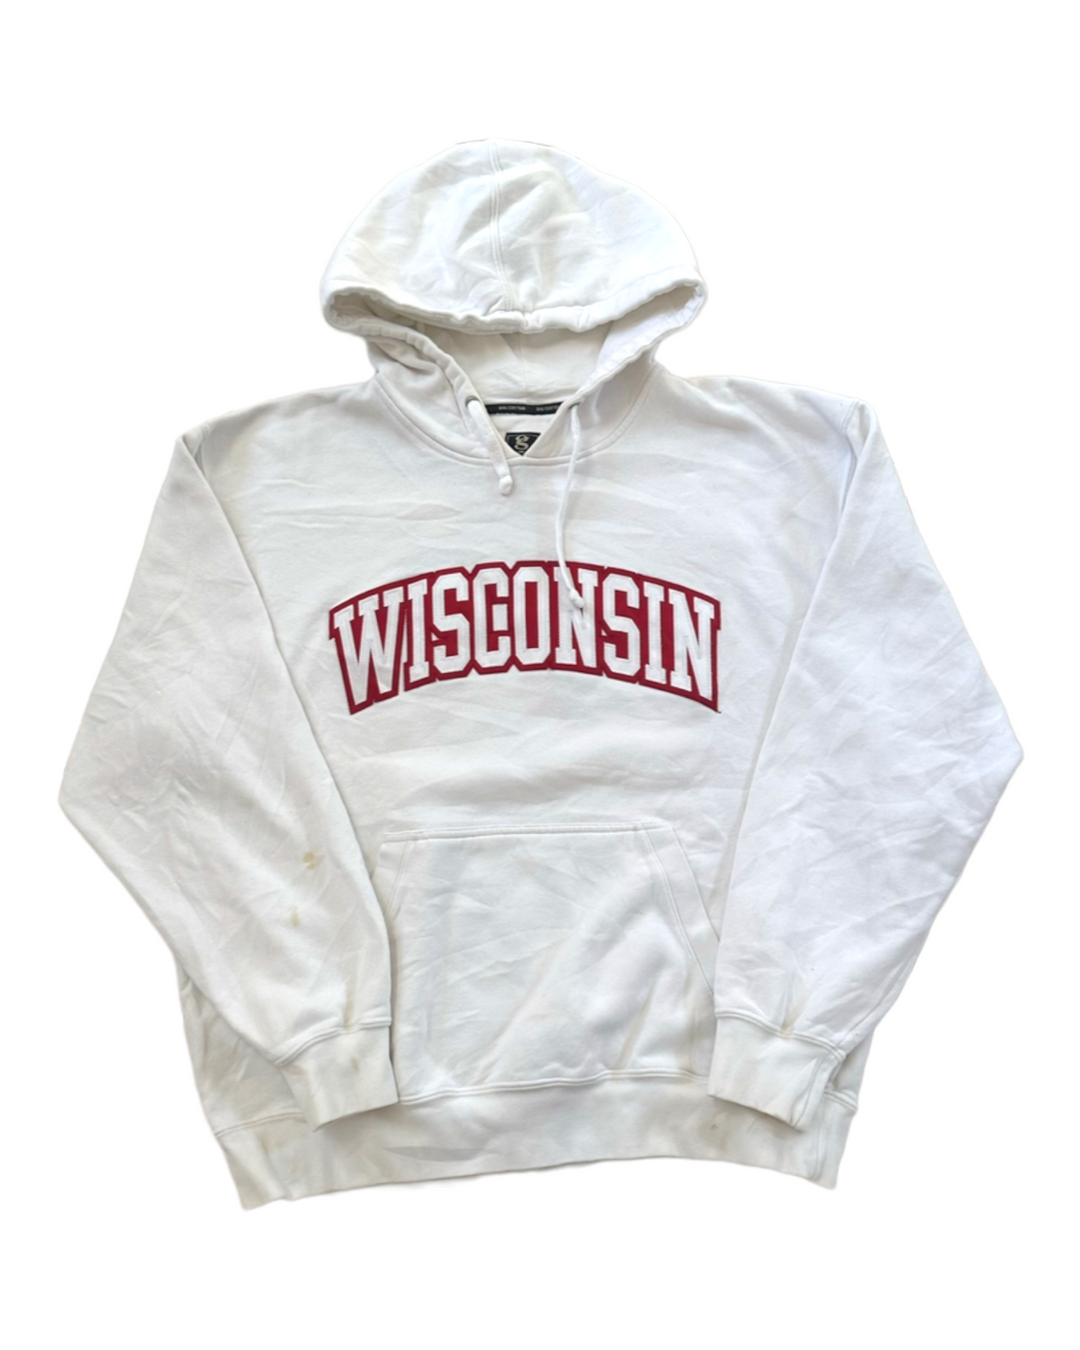 Wisconsin One Of A Kind Vintage Sweatshirt